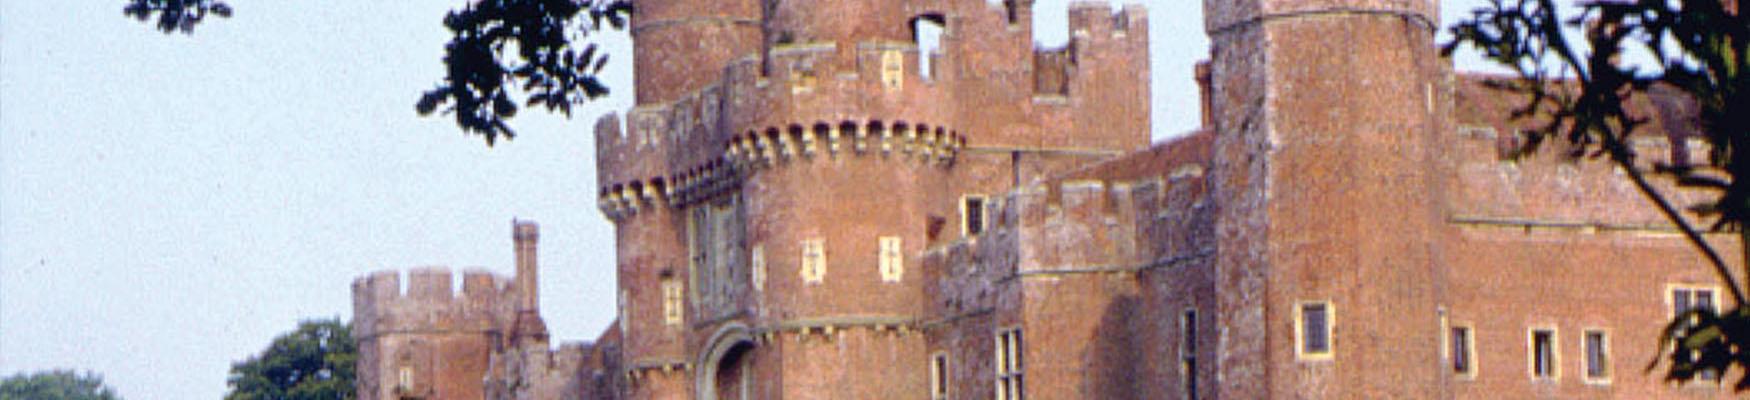 Close up of Herstmonceux castle turrets